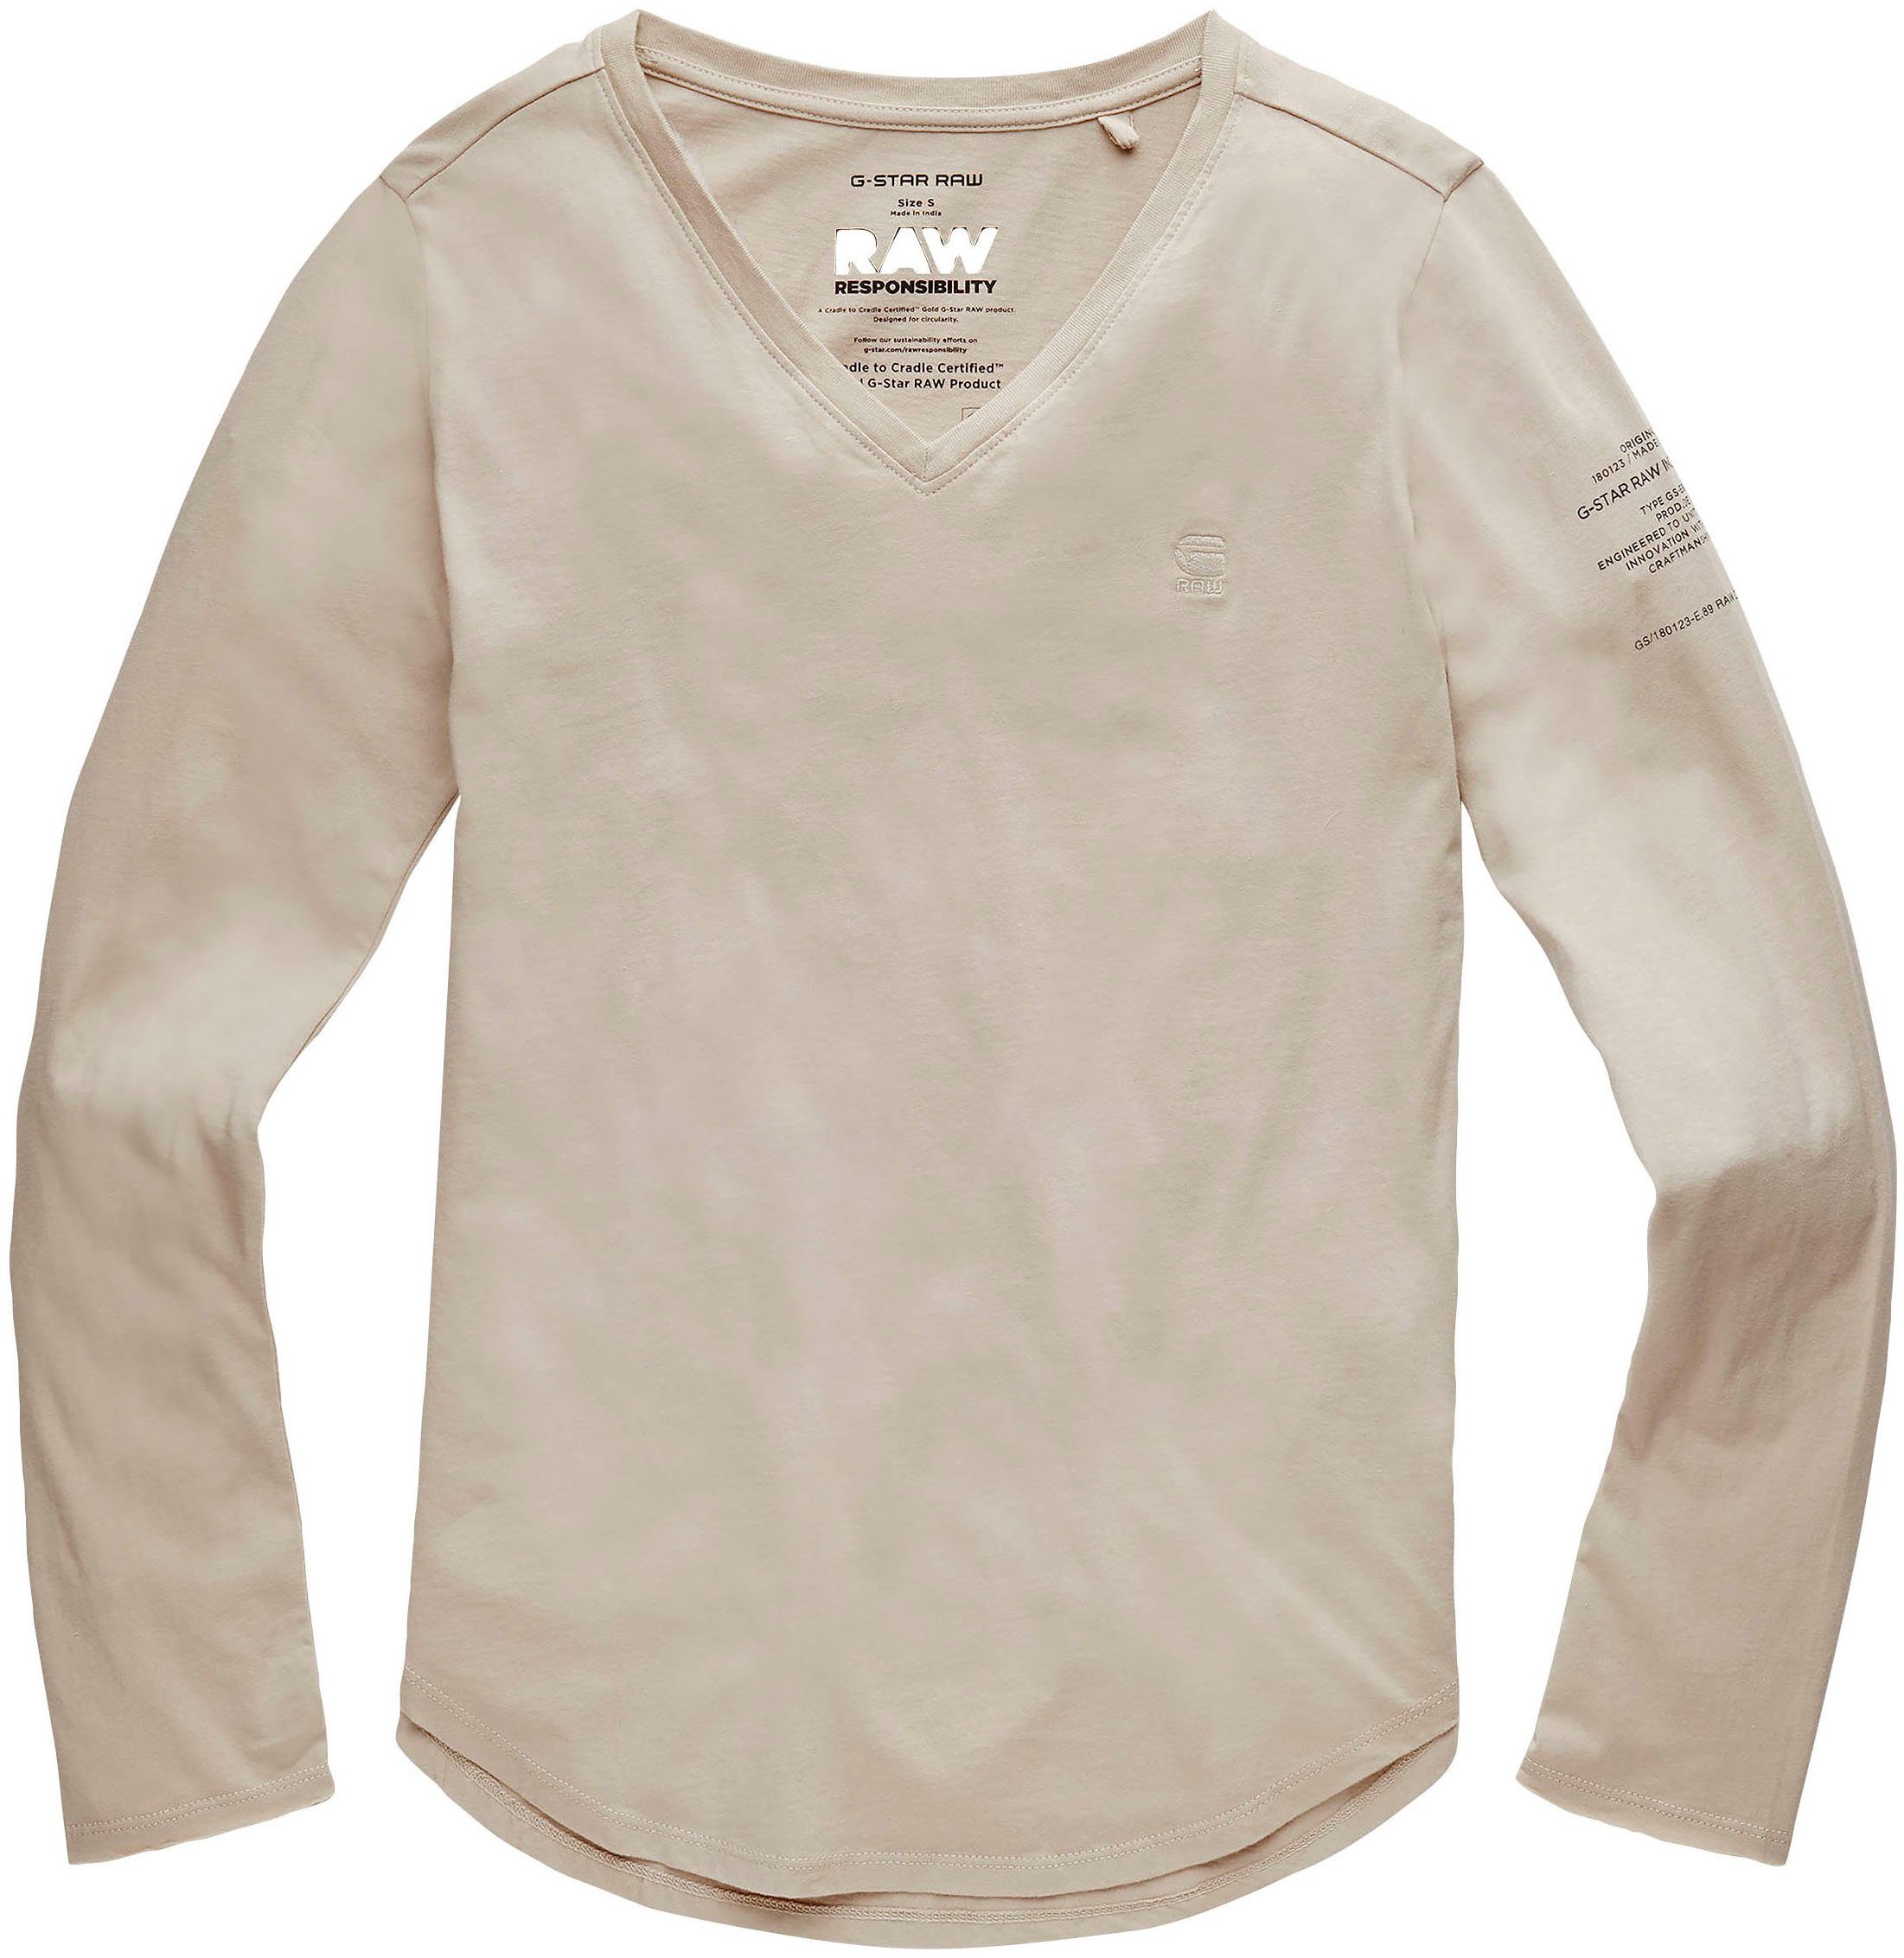 Damen Shirts G-Star RAW Langarmshirt Rolled edge v-neck longsleeve Longsleeve aus weicher Bio Baumwolle